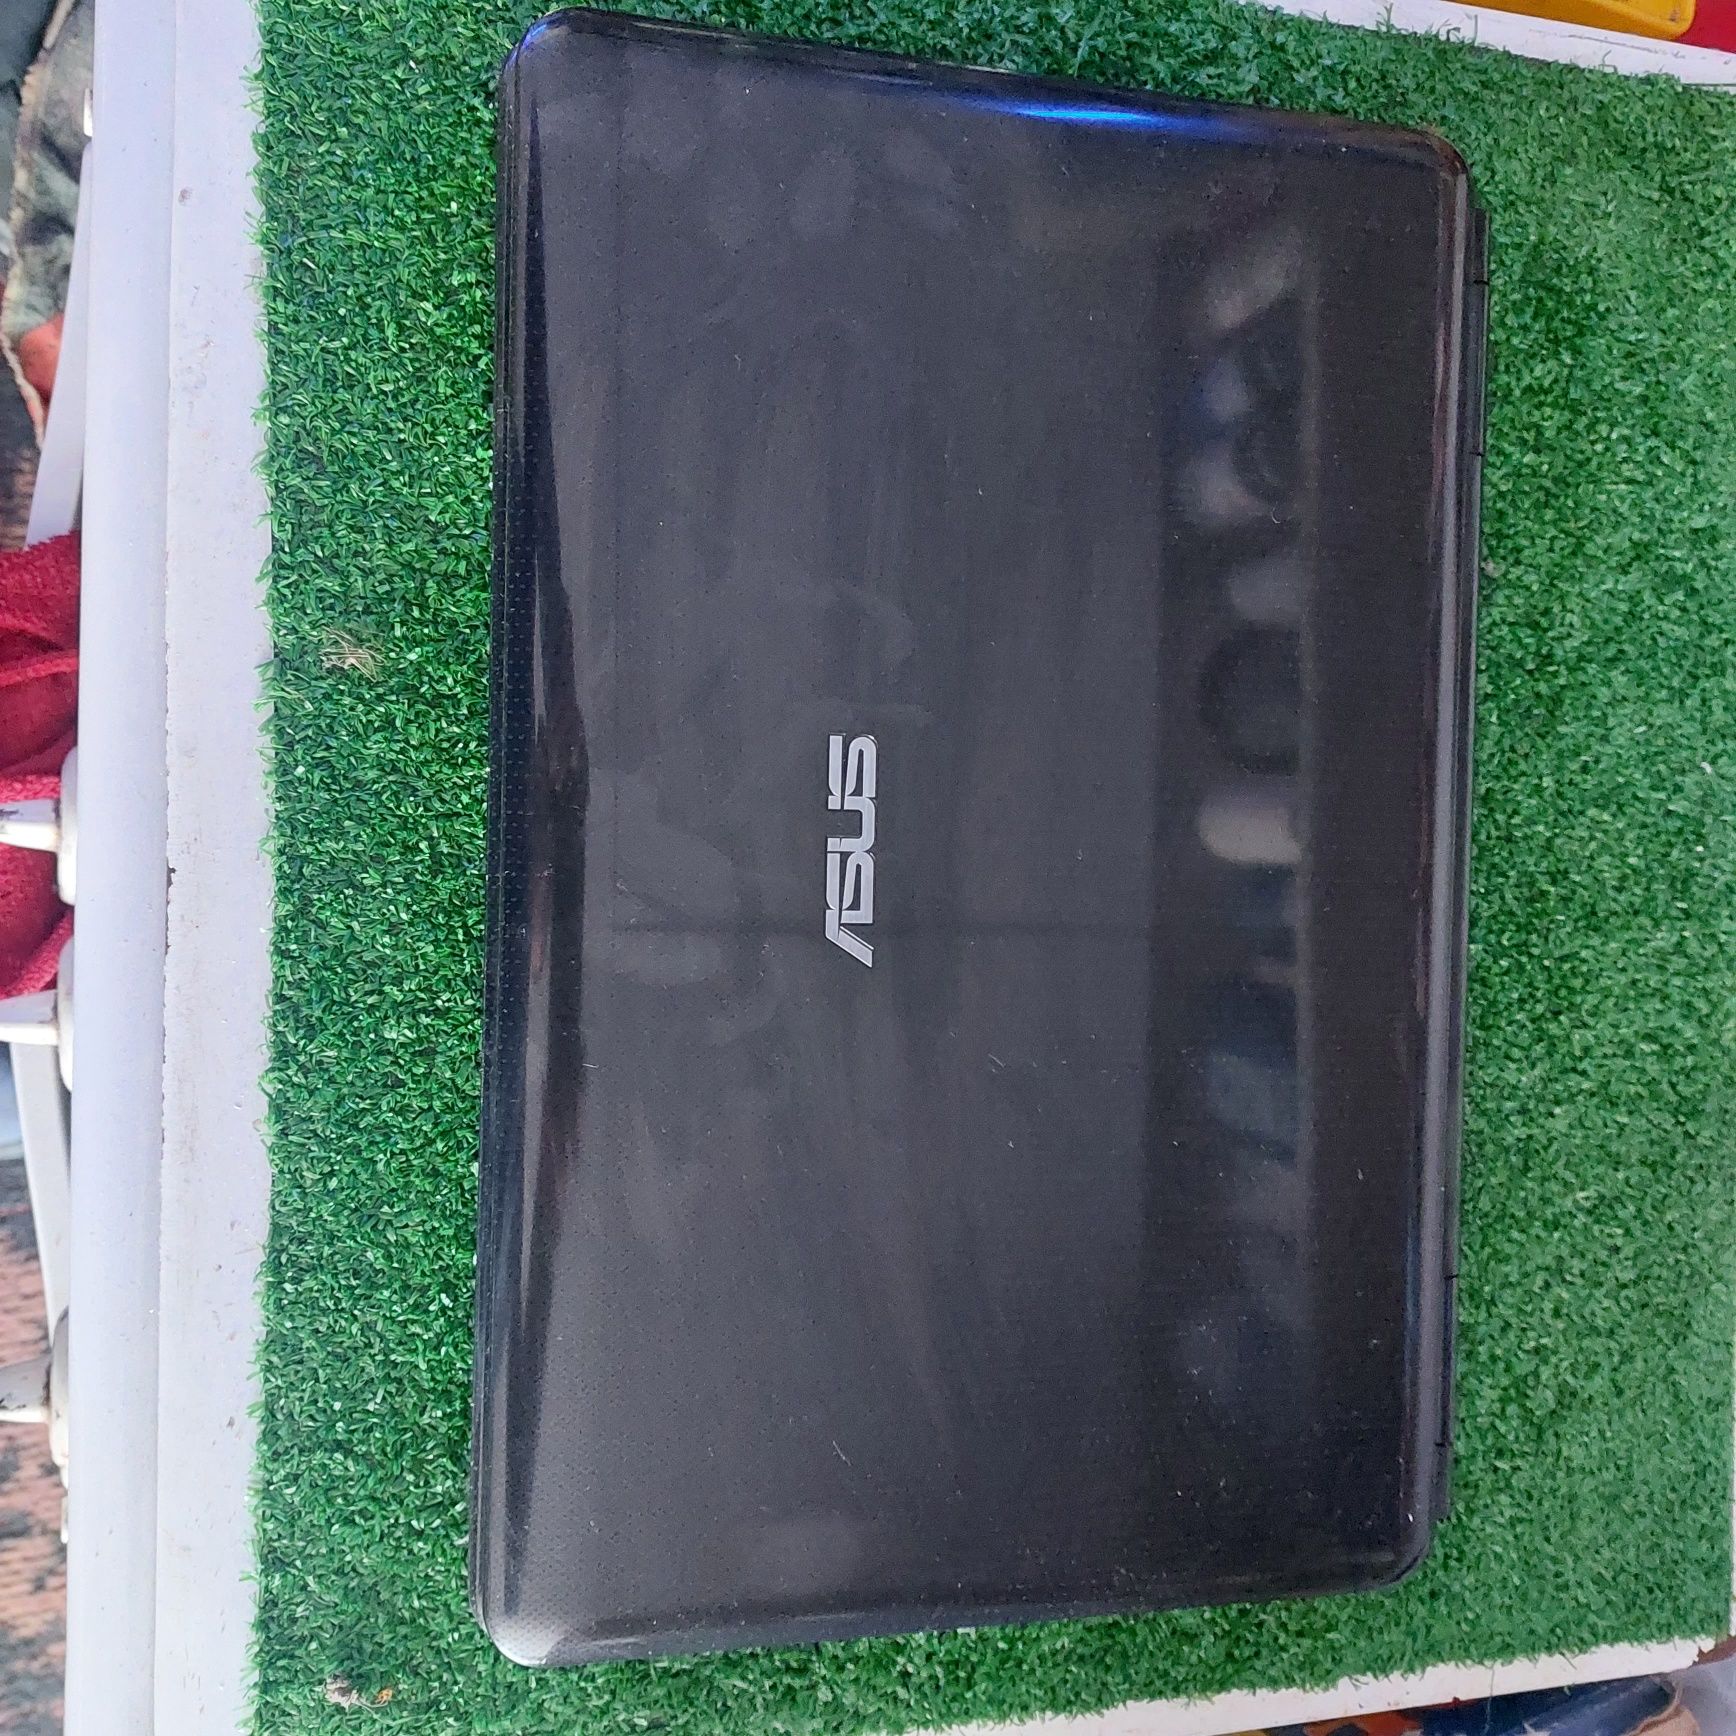 Laptop Asus x5 dab defect